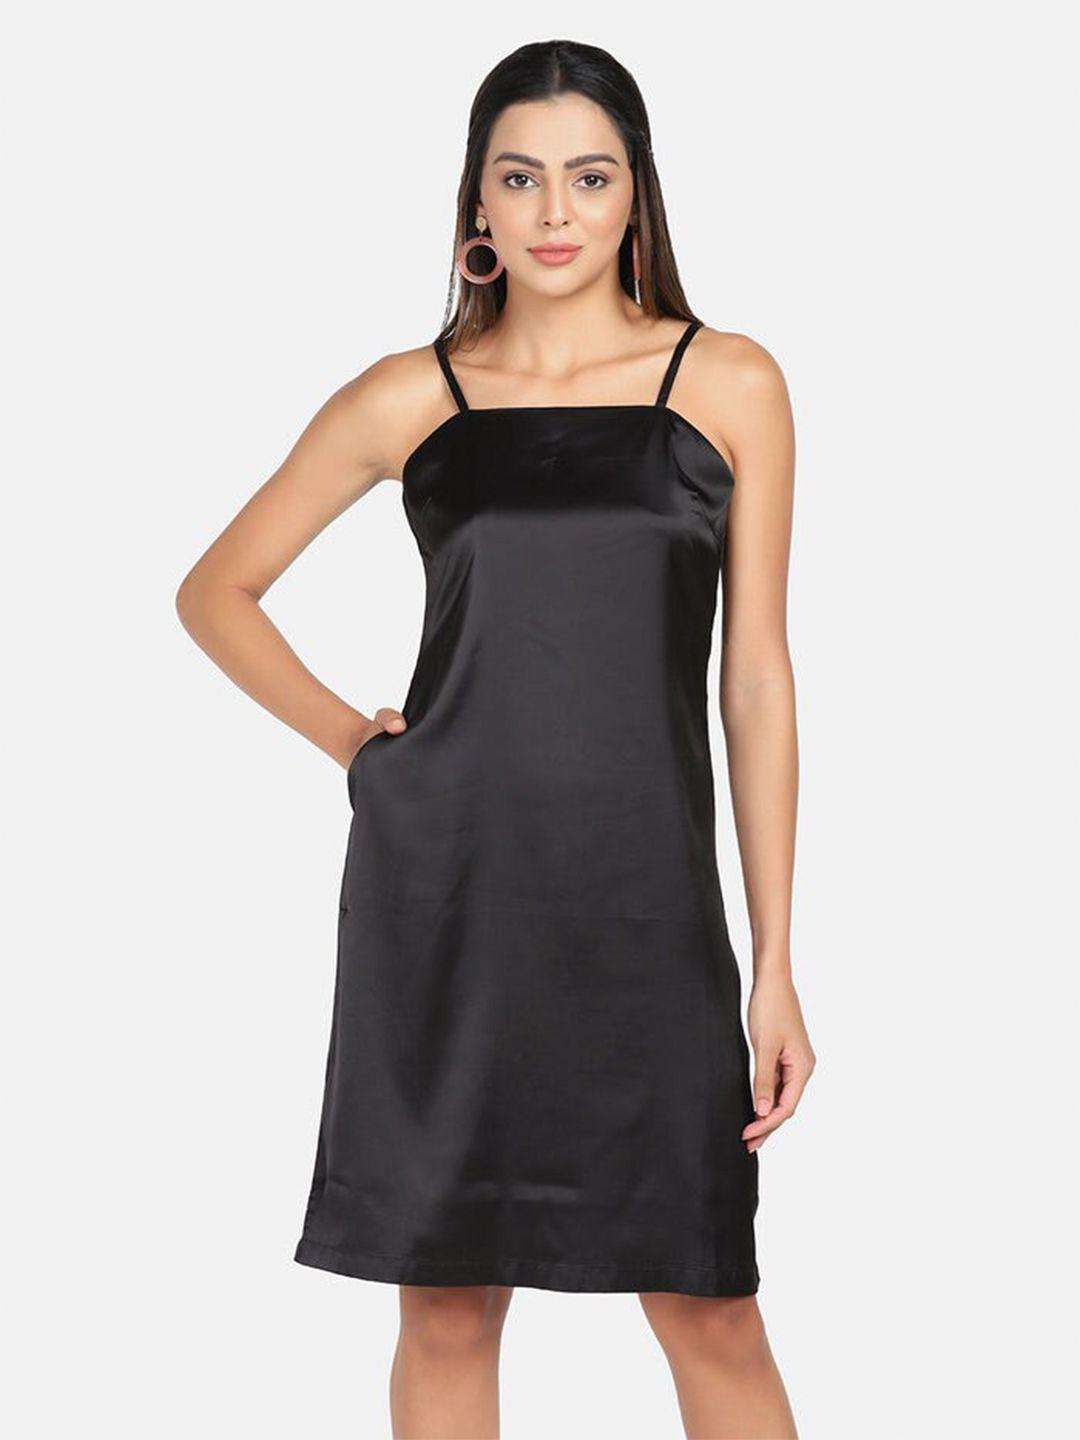 powersutra-women-black-satin-a-line-dress